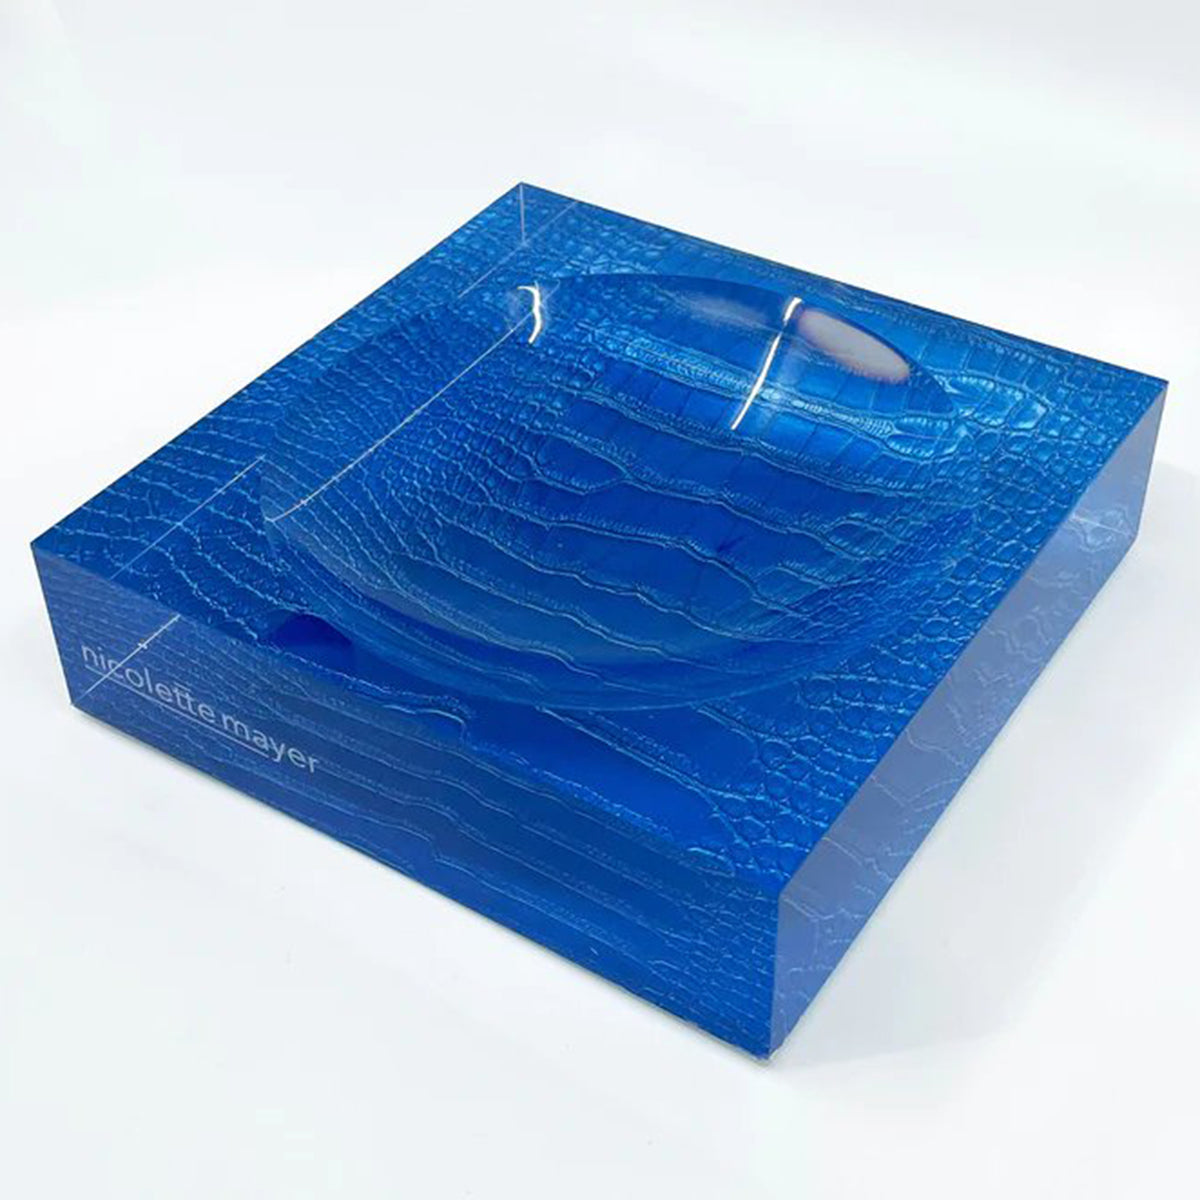 Nicolette Mayer Crocodile Kyoto Blue Acrylic Candy Tray